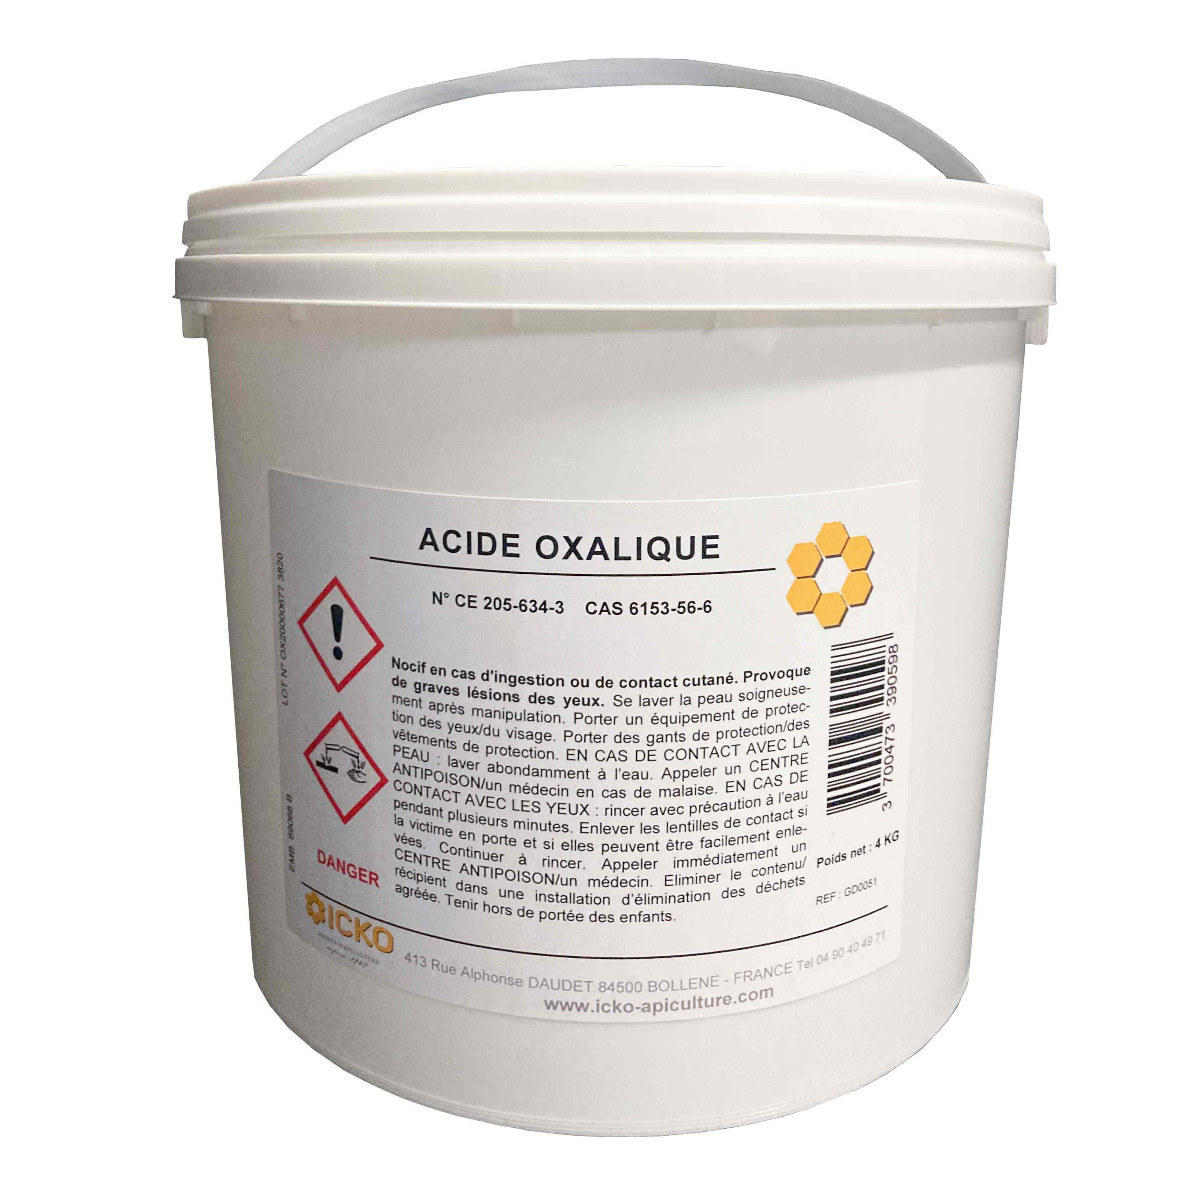 https://www.icko-apiculture.com/media/catalog/product/image/141776913/acide-oxalique-seau-de-4-kg.jpg